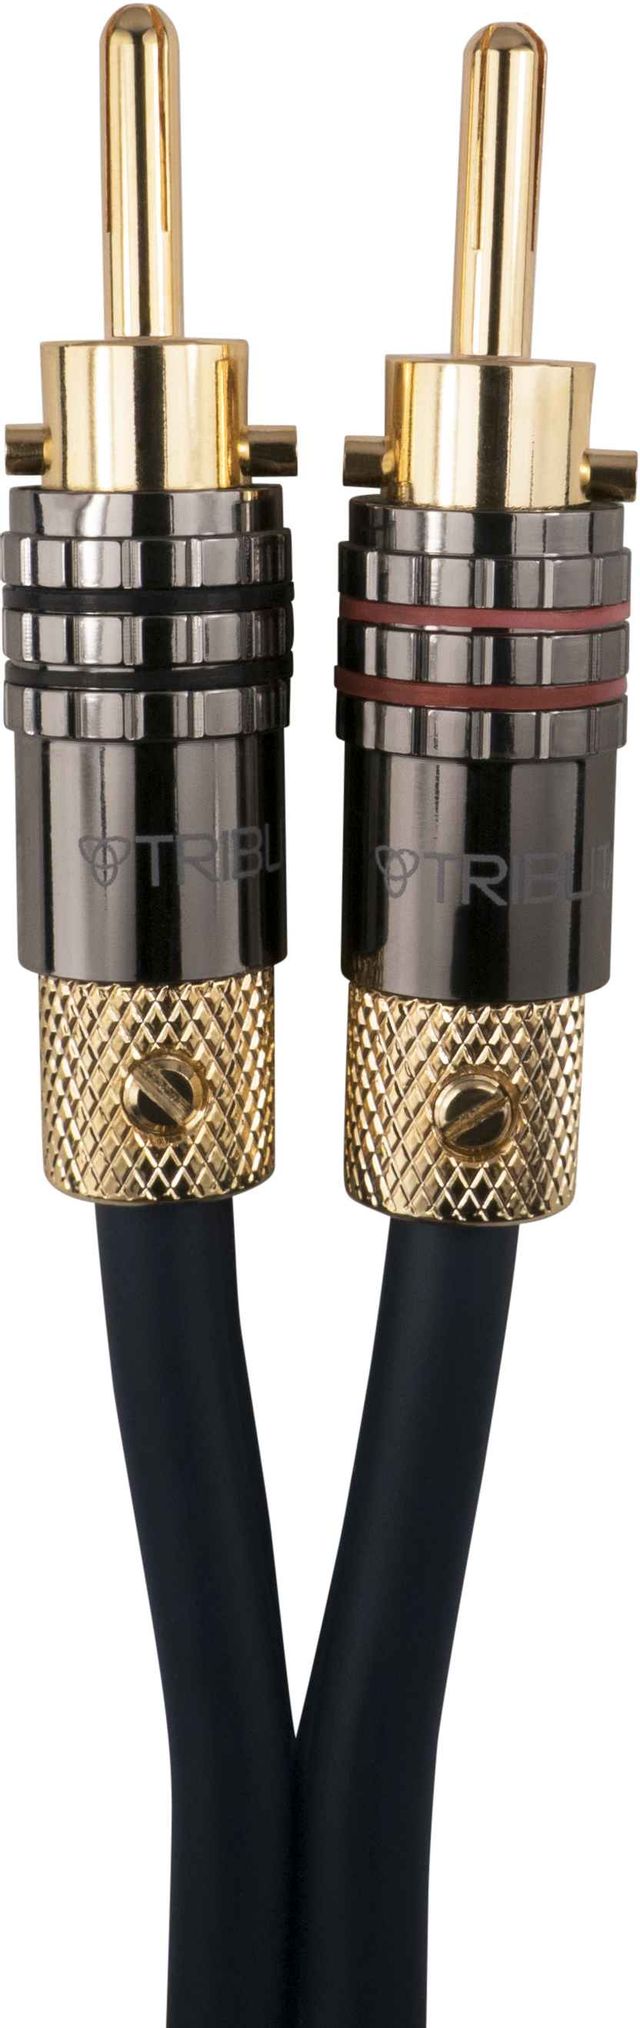 Tributaries® Series 8 10 Ft. Banana Plugs Speaker Cable